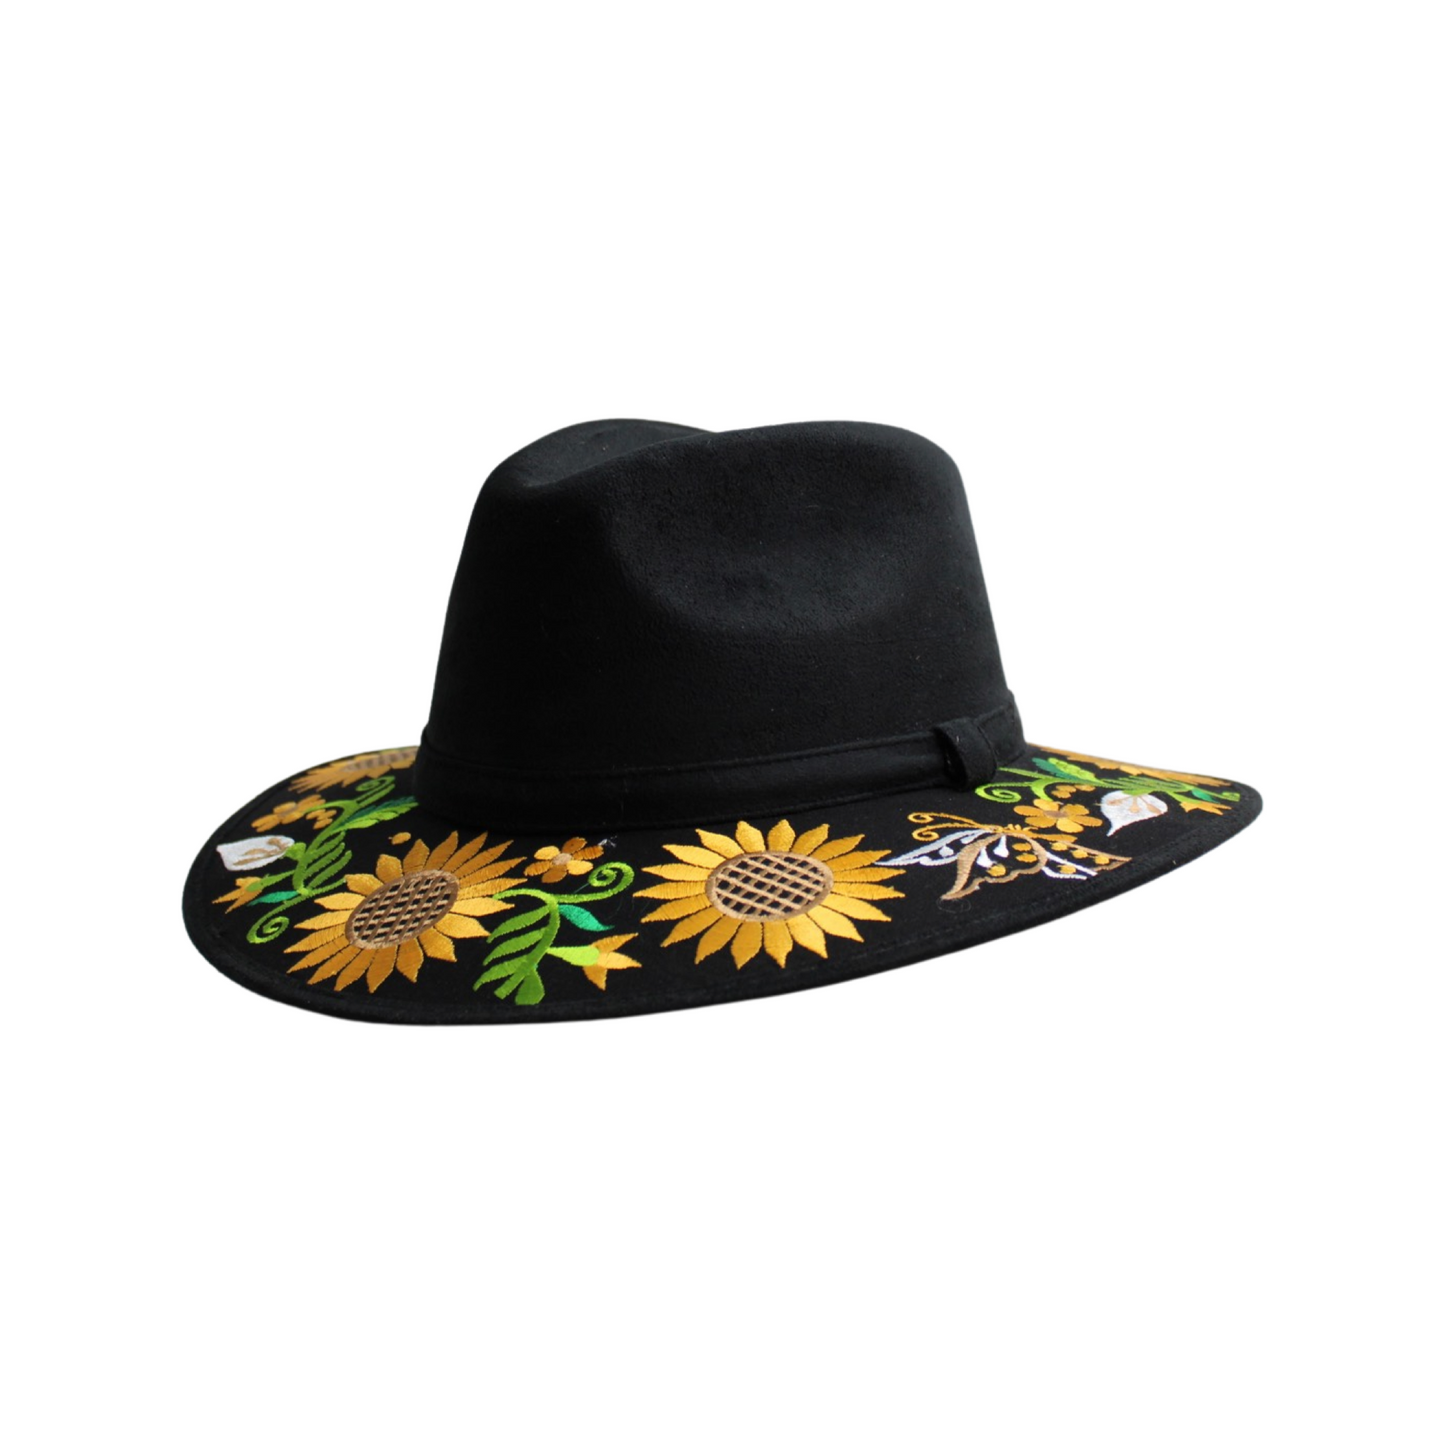 Cerrito Hats: Sunflower